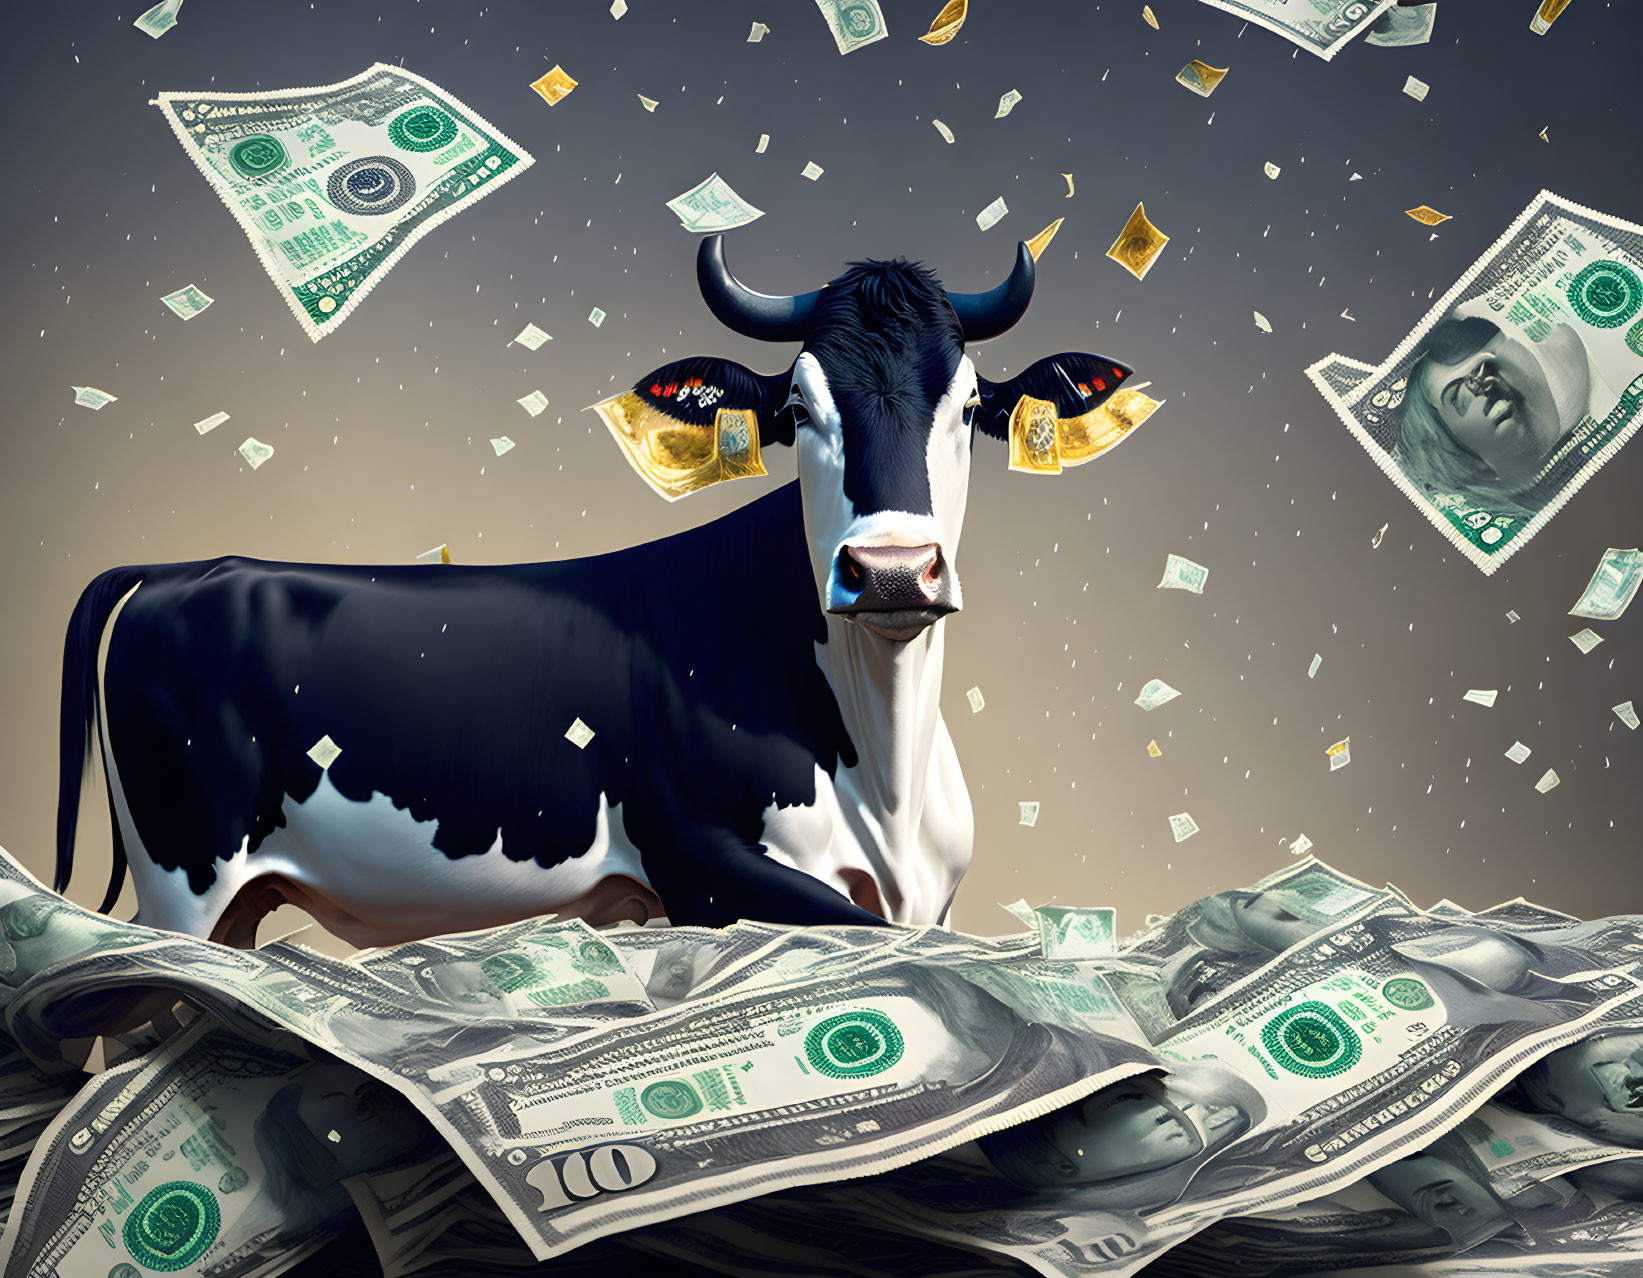 Bull among falling dollar bills symbolizes financial uptrend